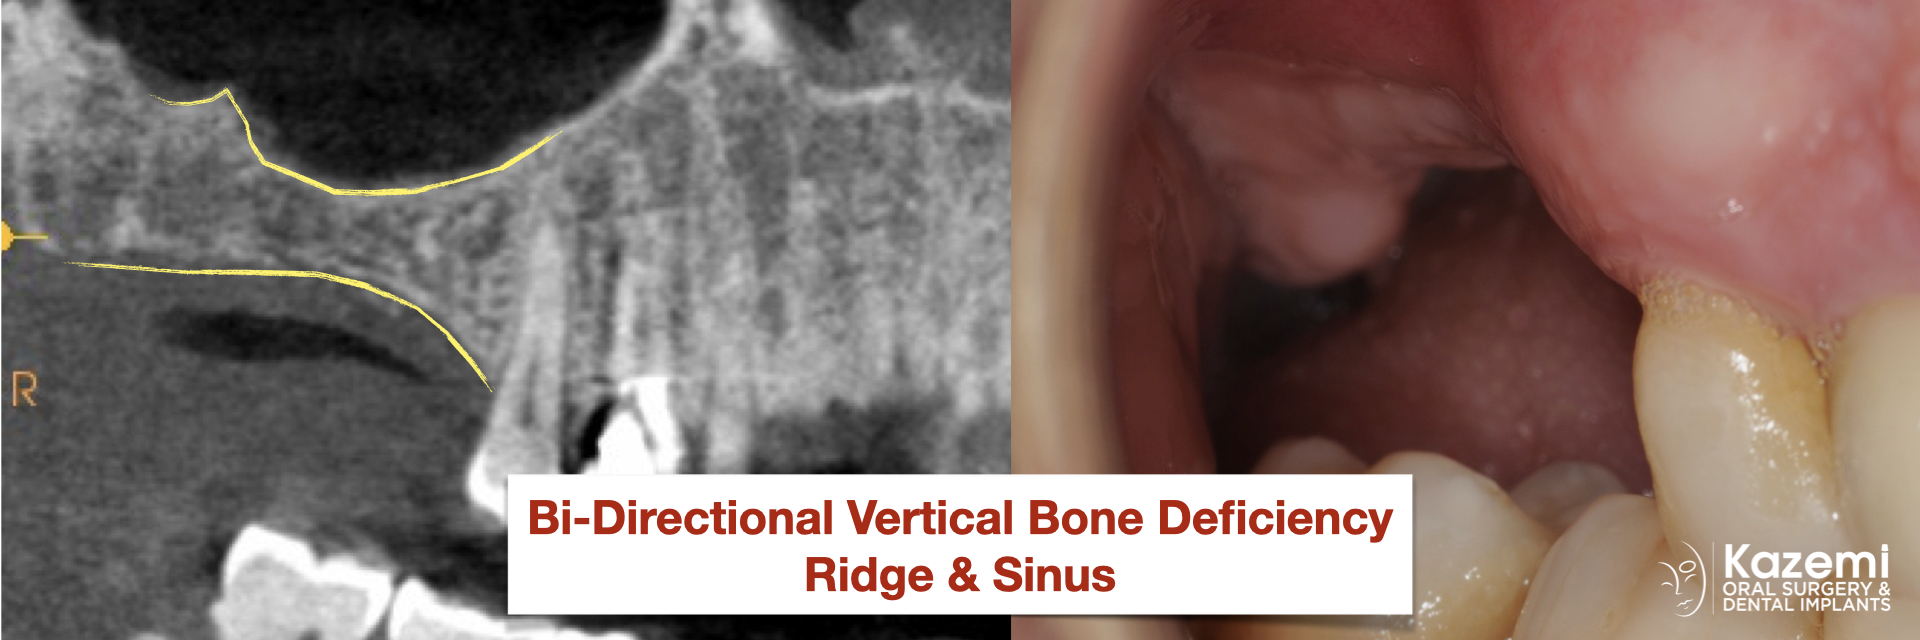 Sinus-lift-bone-graft-Ridge-bone-graft-vertical-deficiency-for-dental-implants-kazemi-oral-surgery-bethesda-MD.001